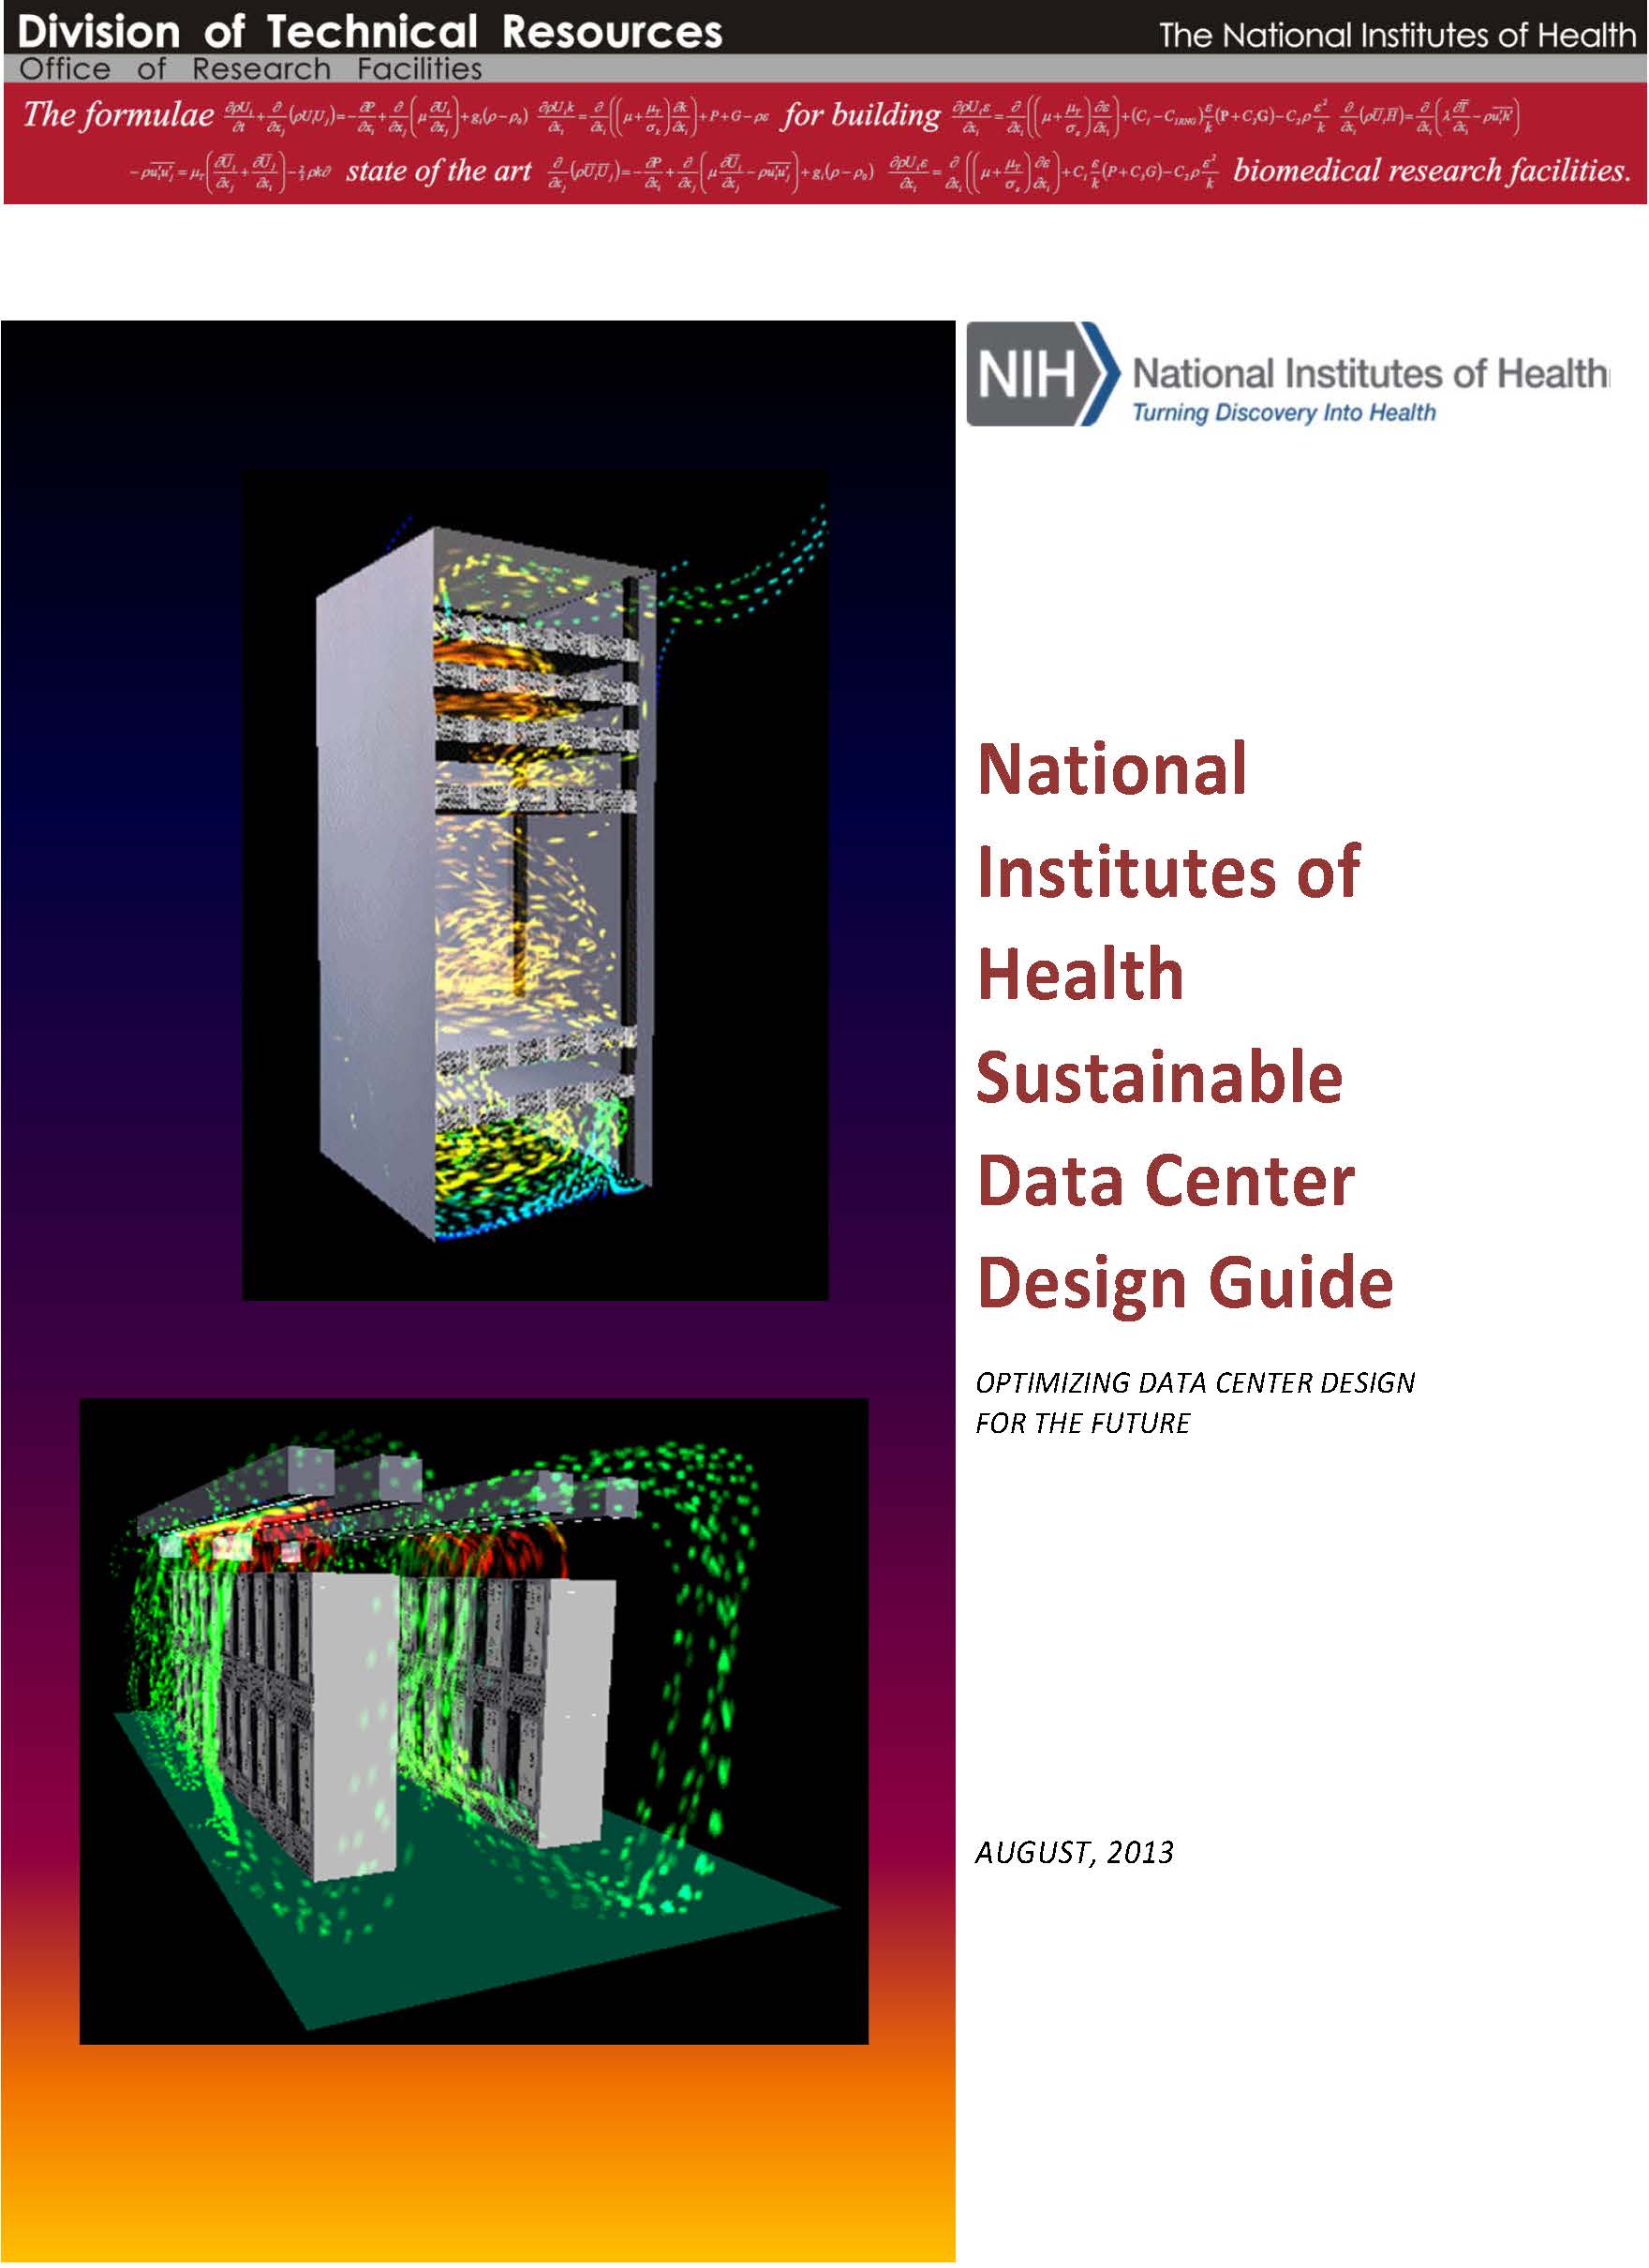 NIH Sustainable Data Center Design Guide_508